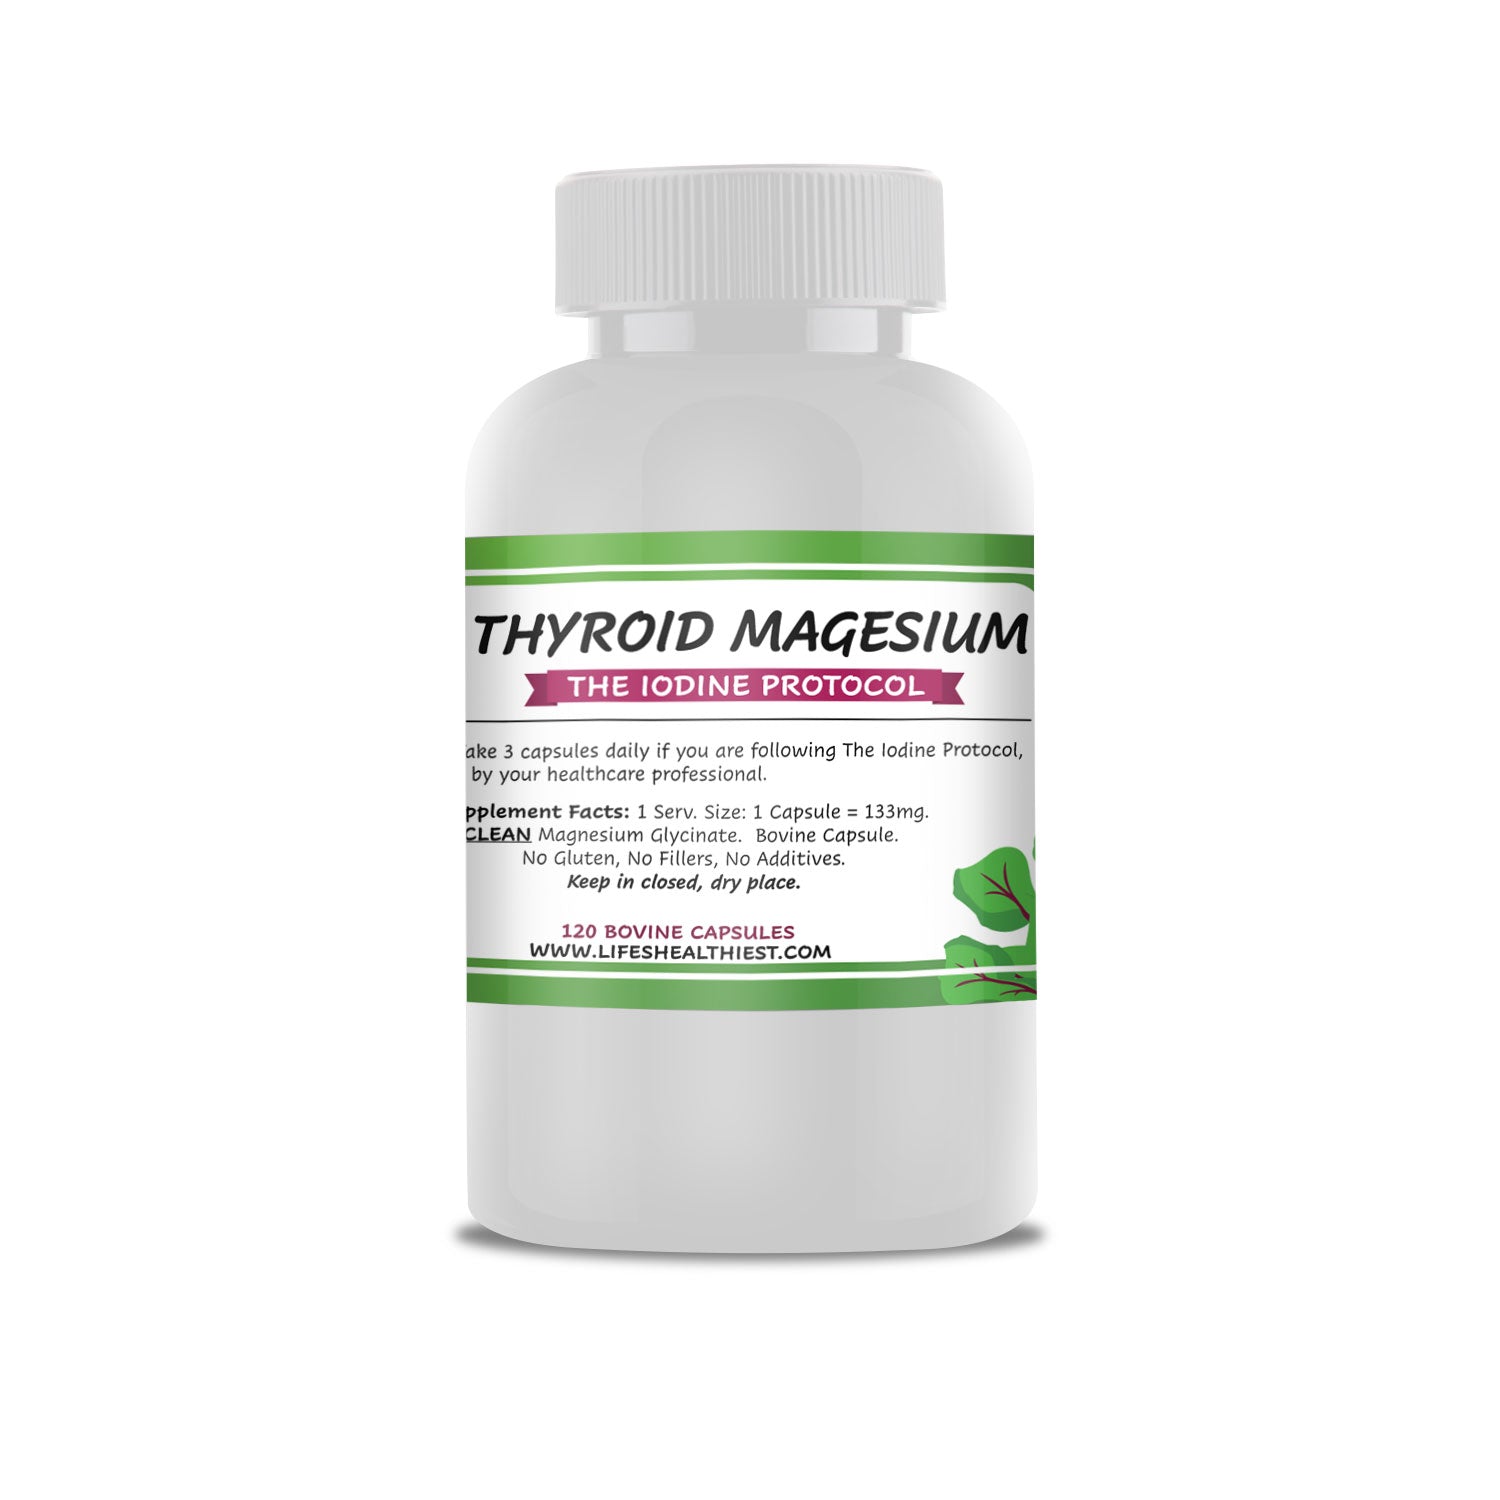 Life's Healthiest Thyroid Magnesium 120 bovine capsules (Iodine Protocol recommended)